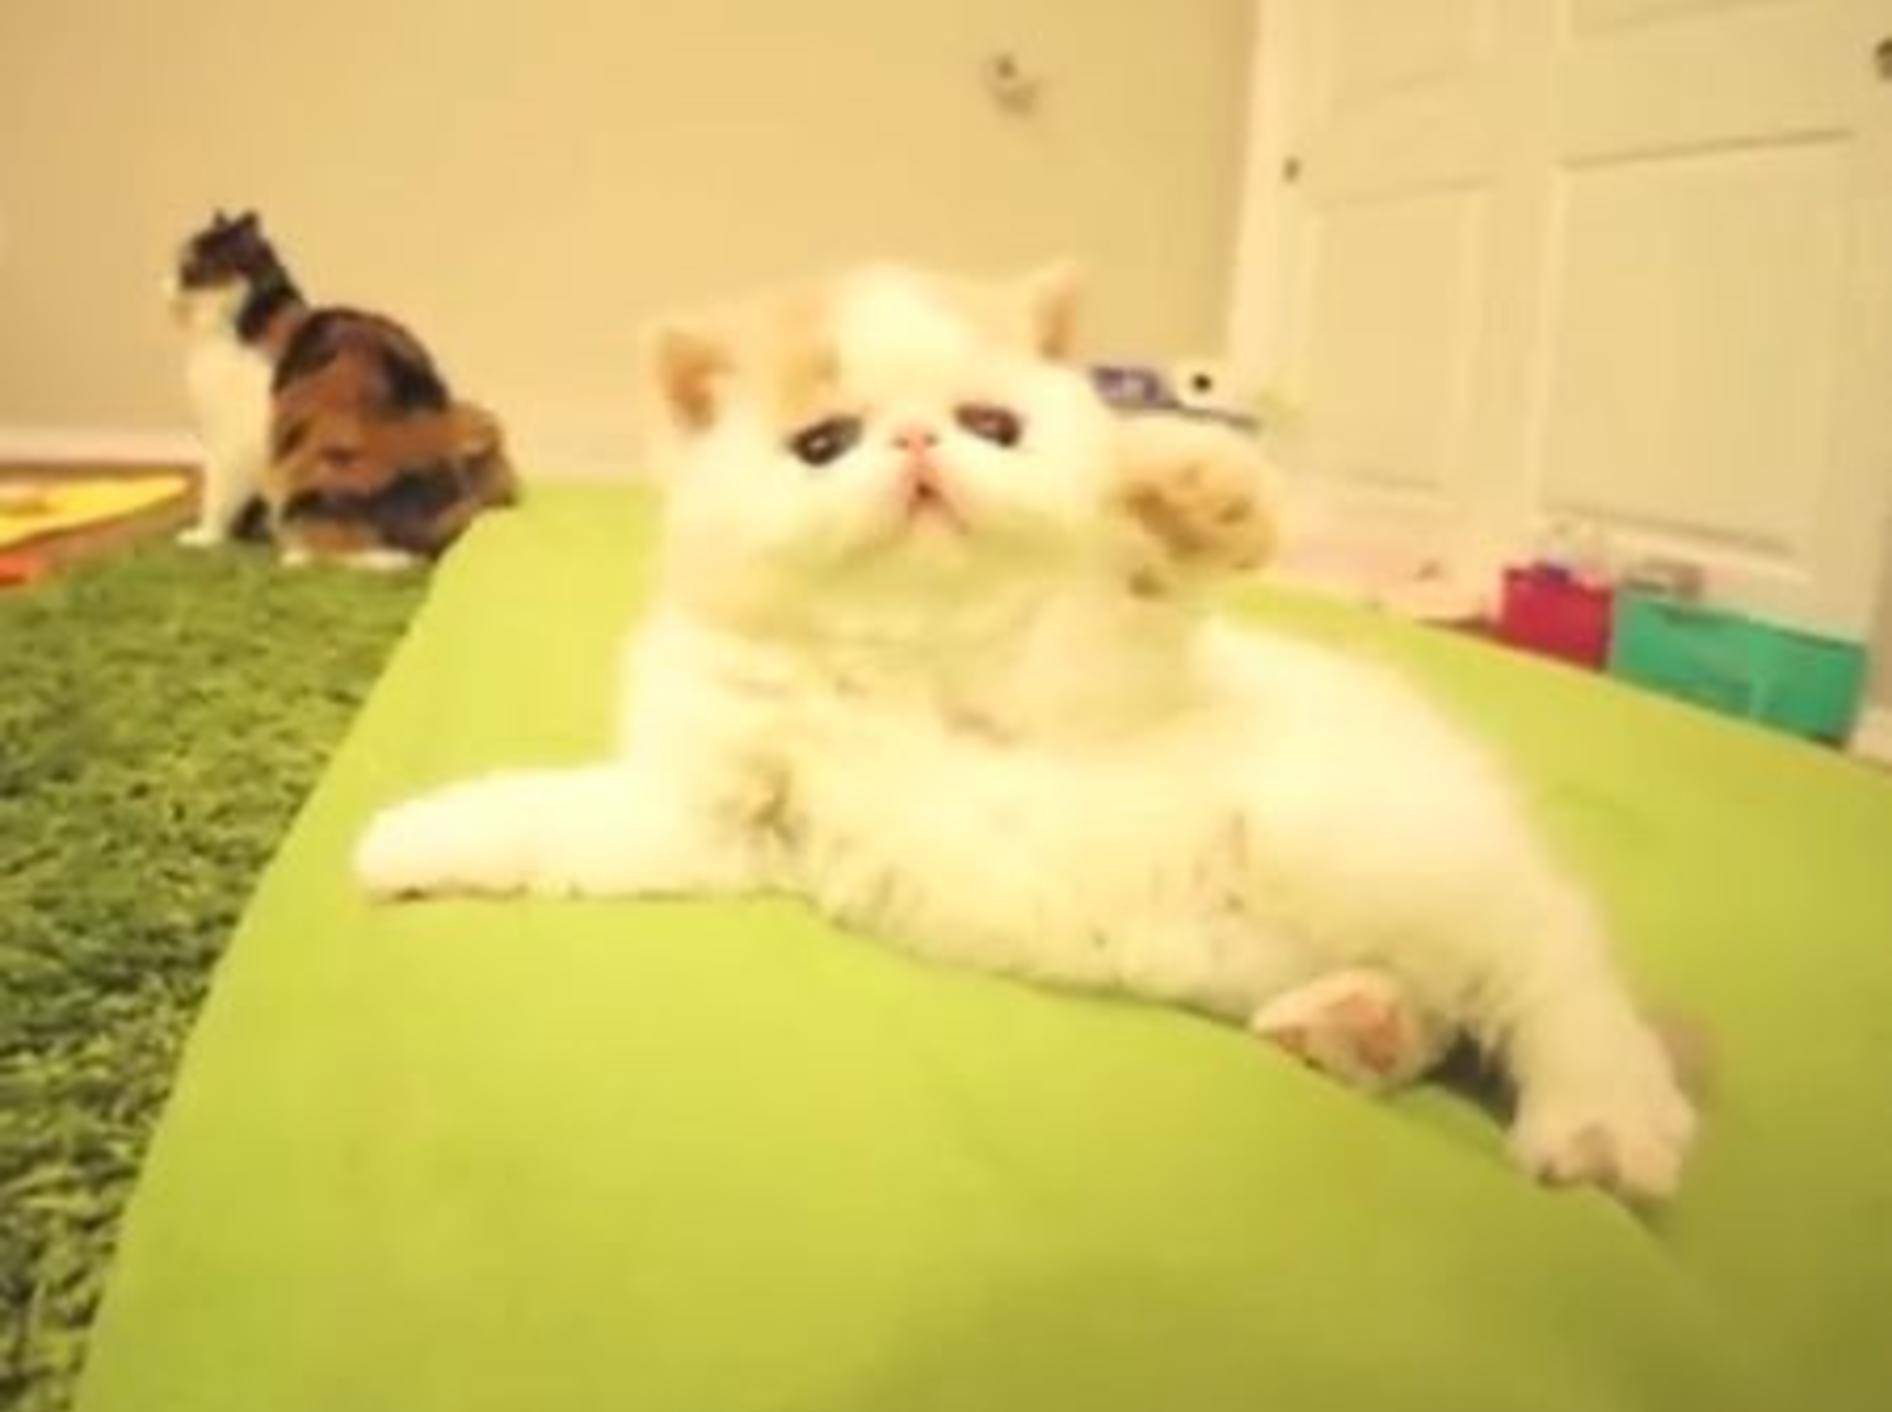 Kätzchen Bun Bun schmeißt sich in Pose - Bild: Youtube / sweetfurx4